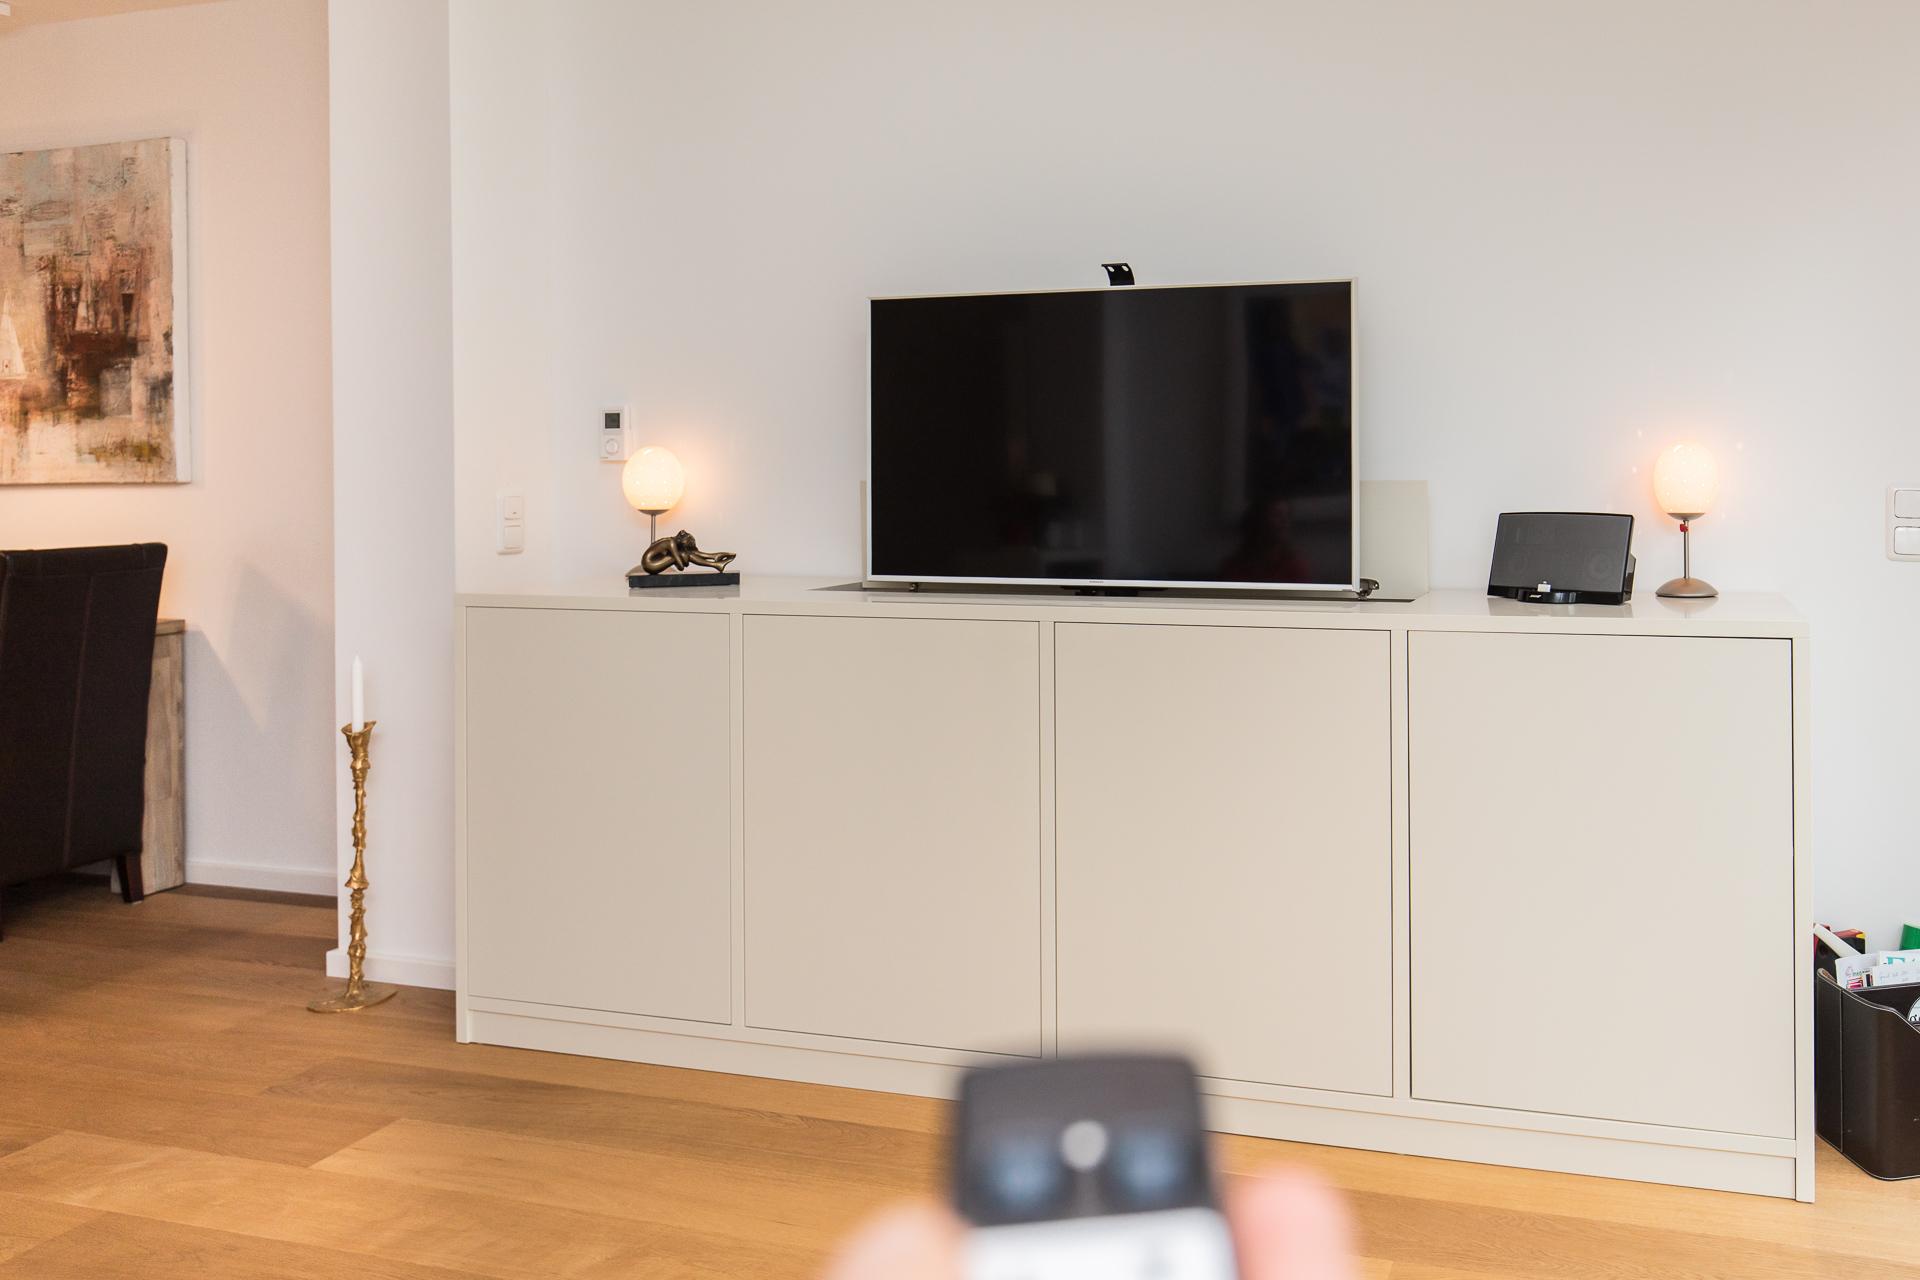 Lackierte Kommode mit integriertem TV-Lift #holzmöbel #kommode #sideboard ©Pickawood GmbH